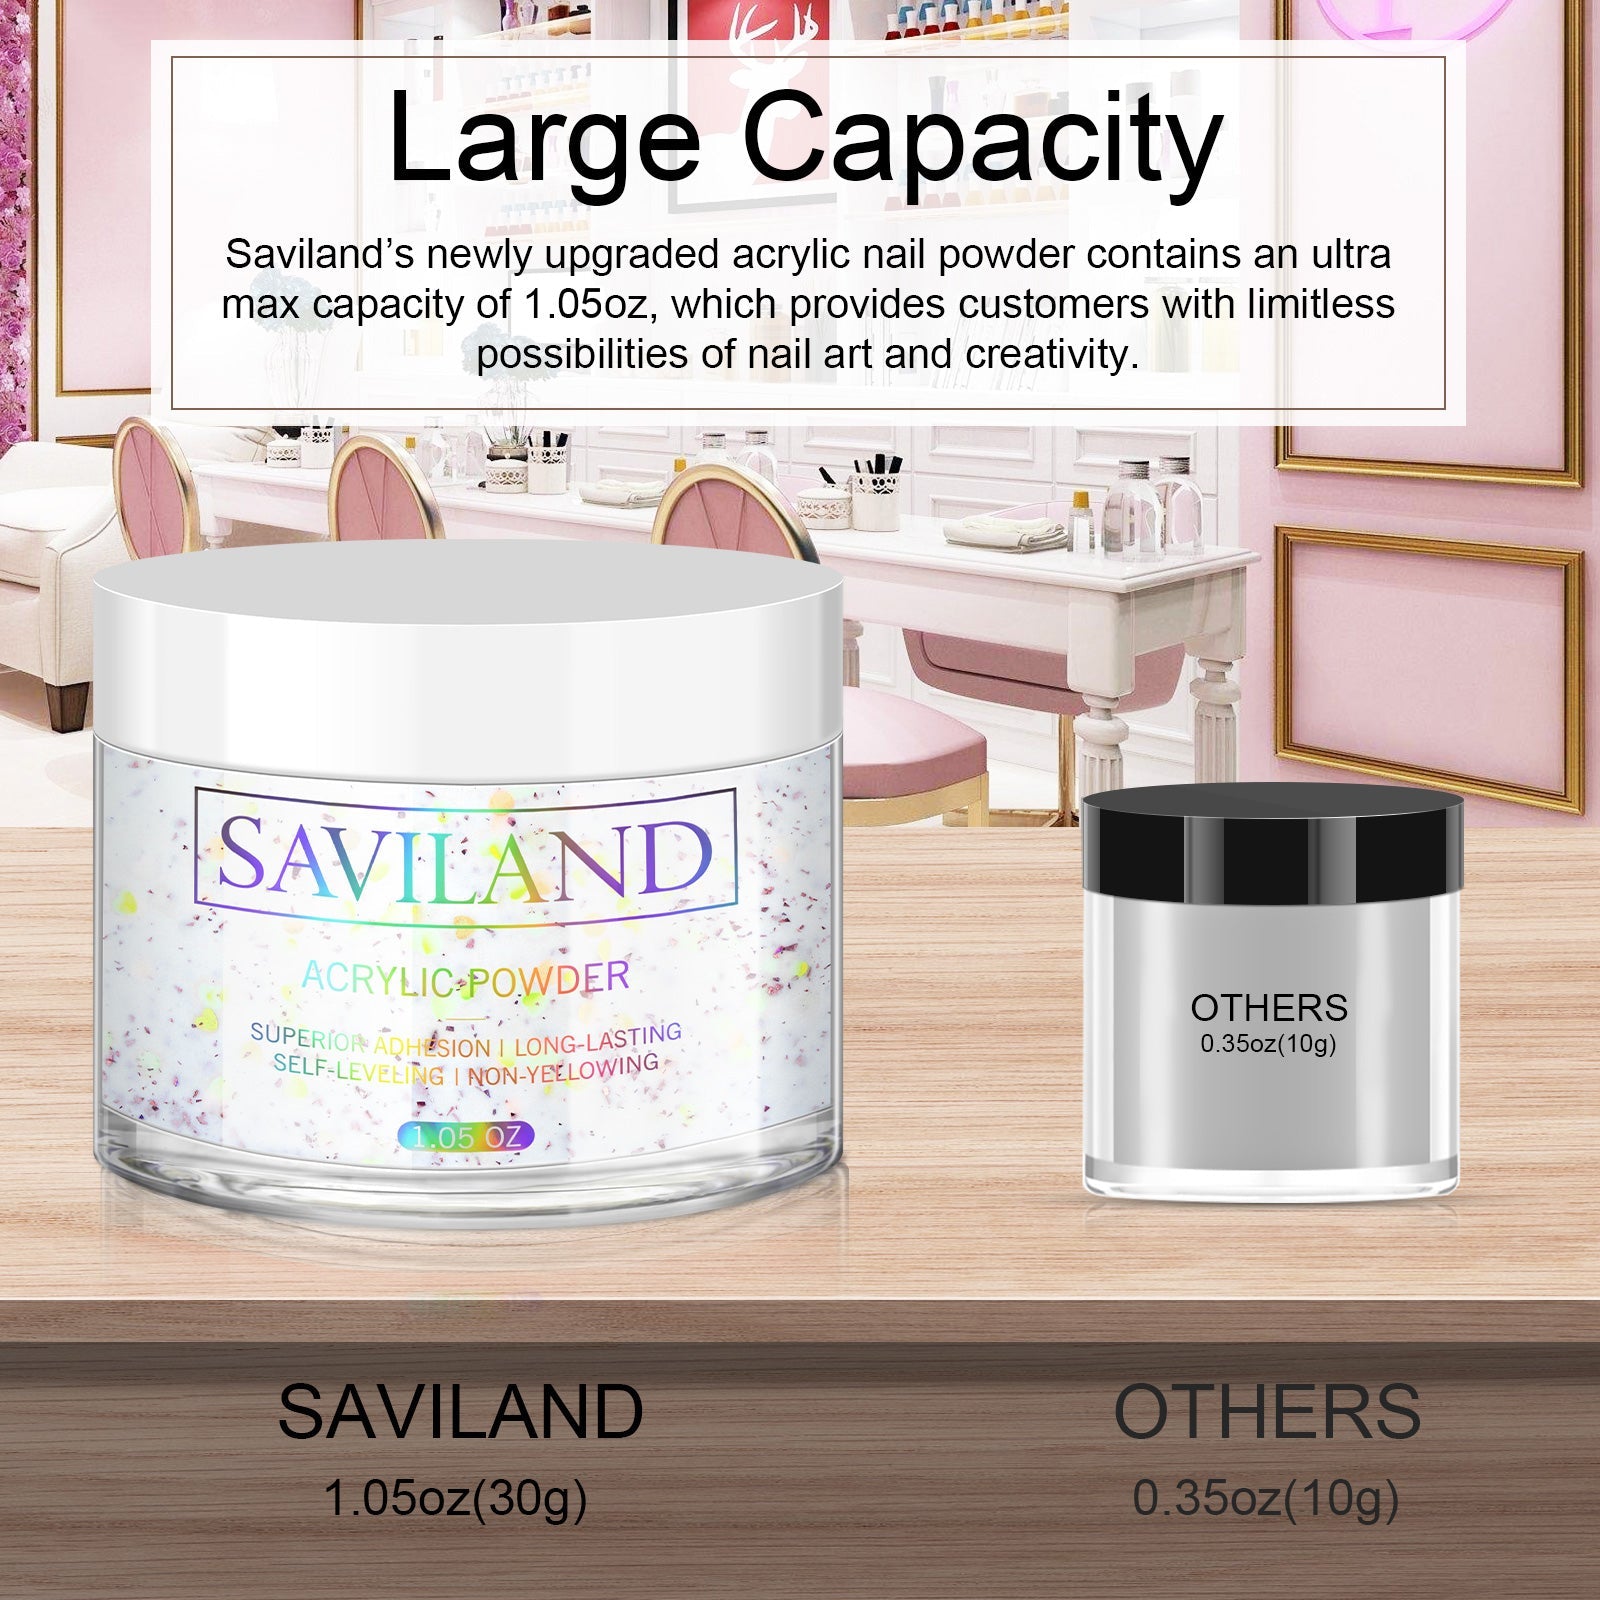 [US ONLY]Glitter Large Capacity Acrylic Powder - 30g